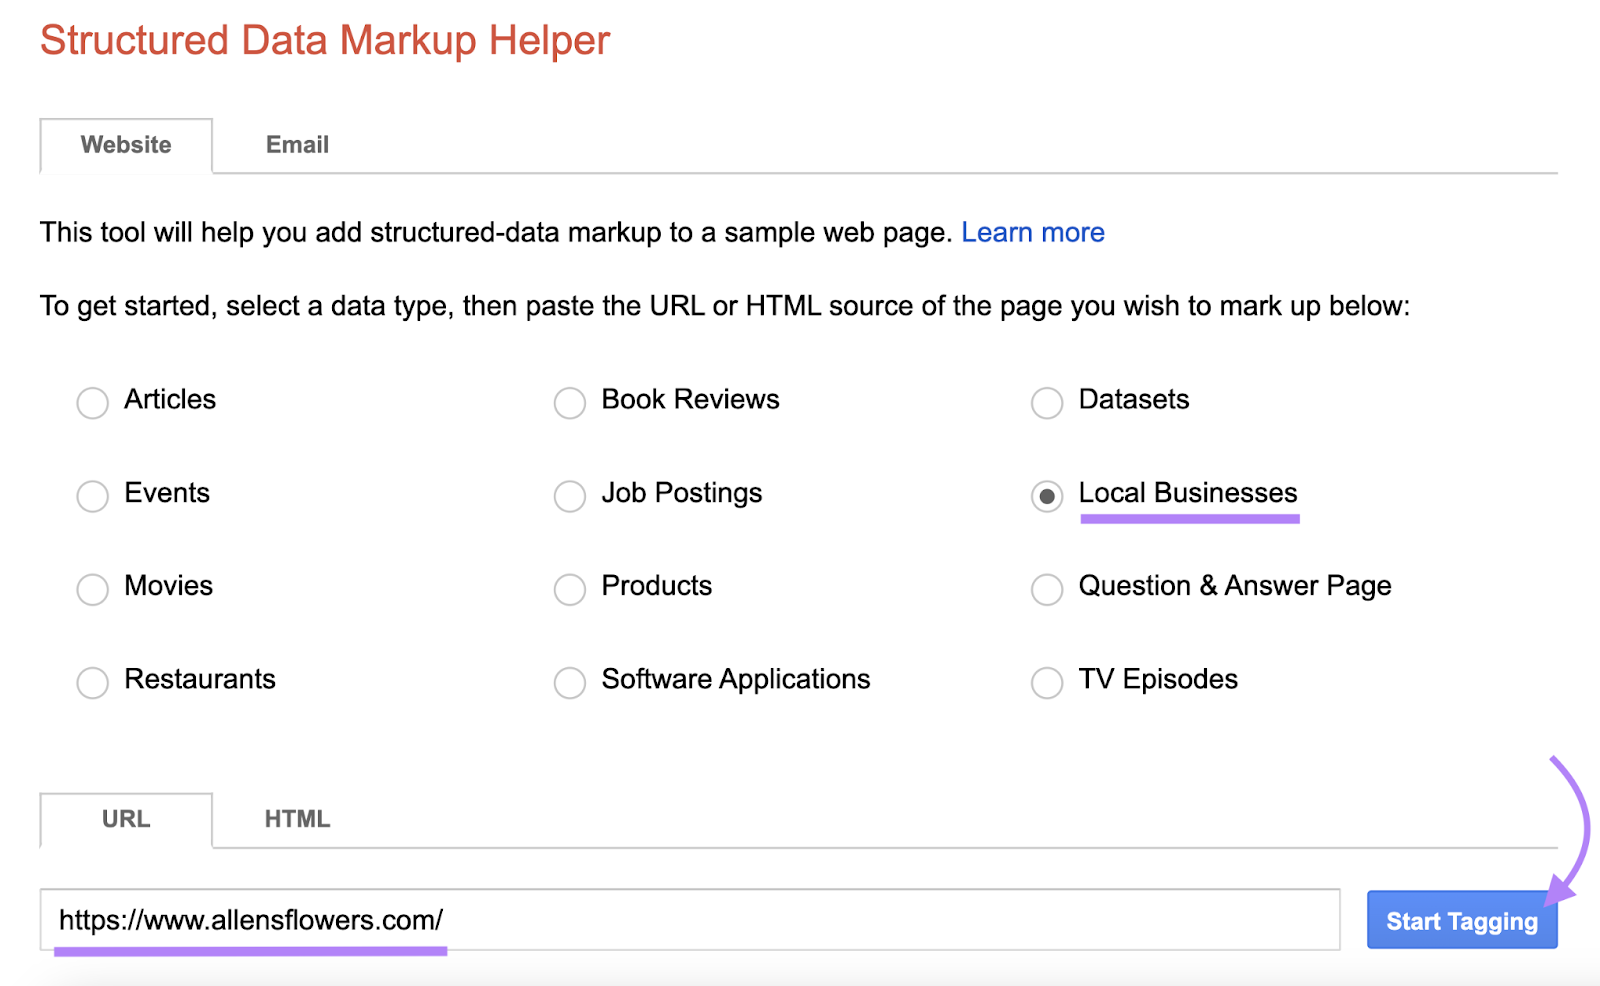 "Start Tagging" button in Structured Data Markup Helper